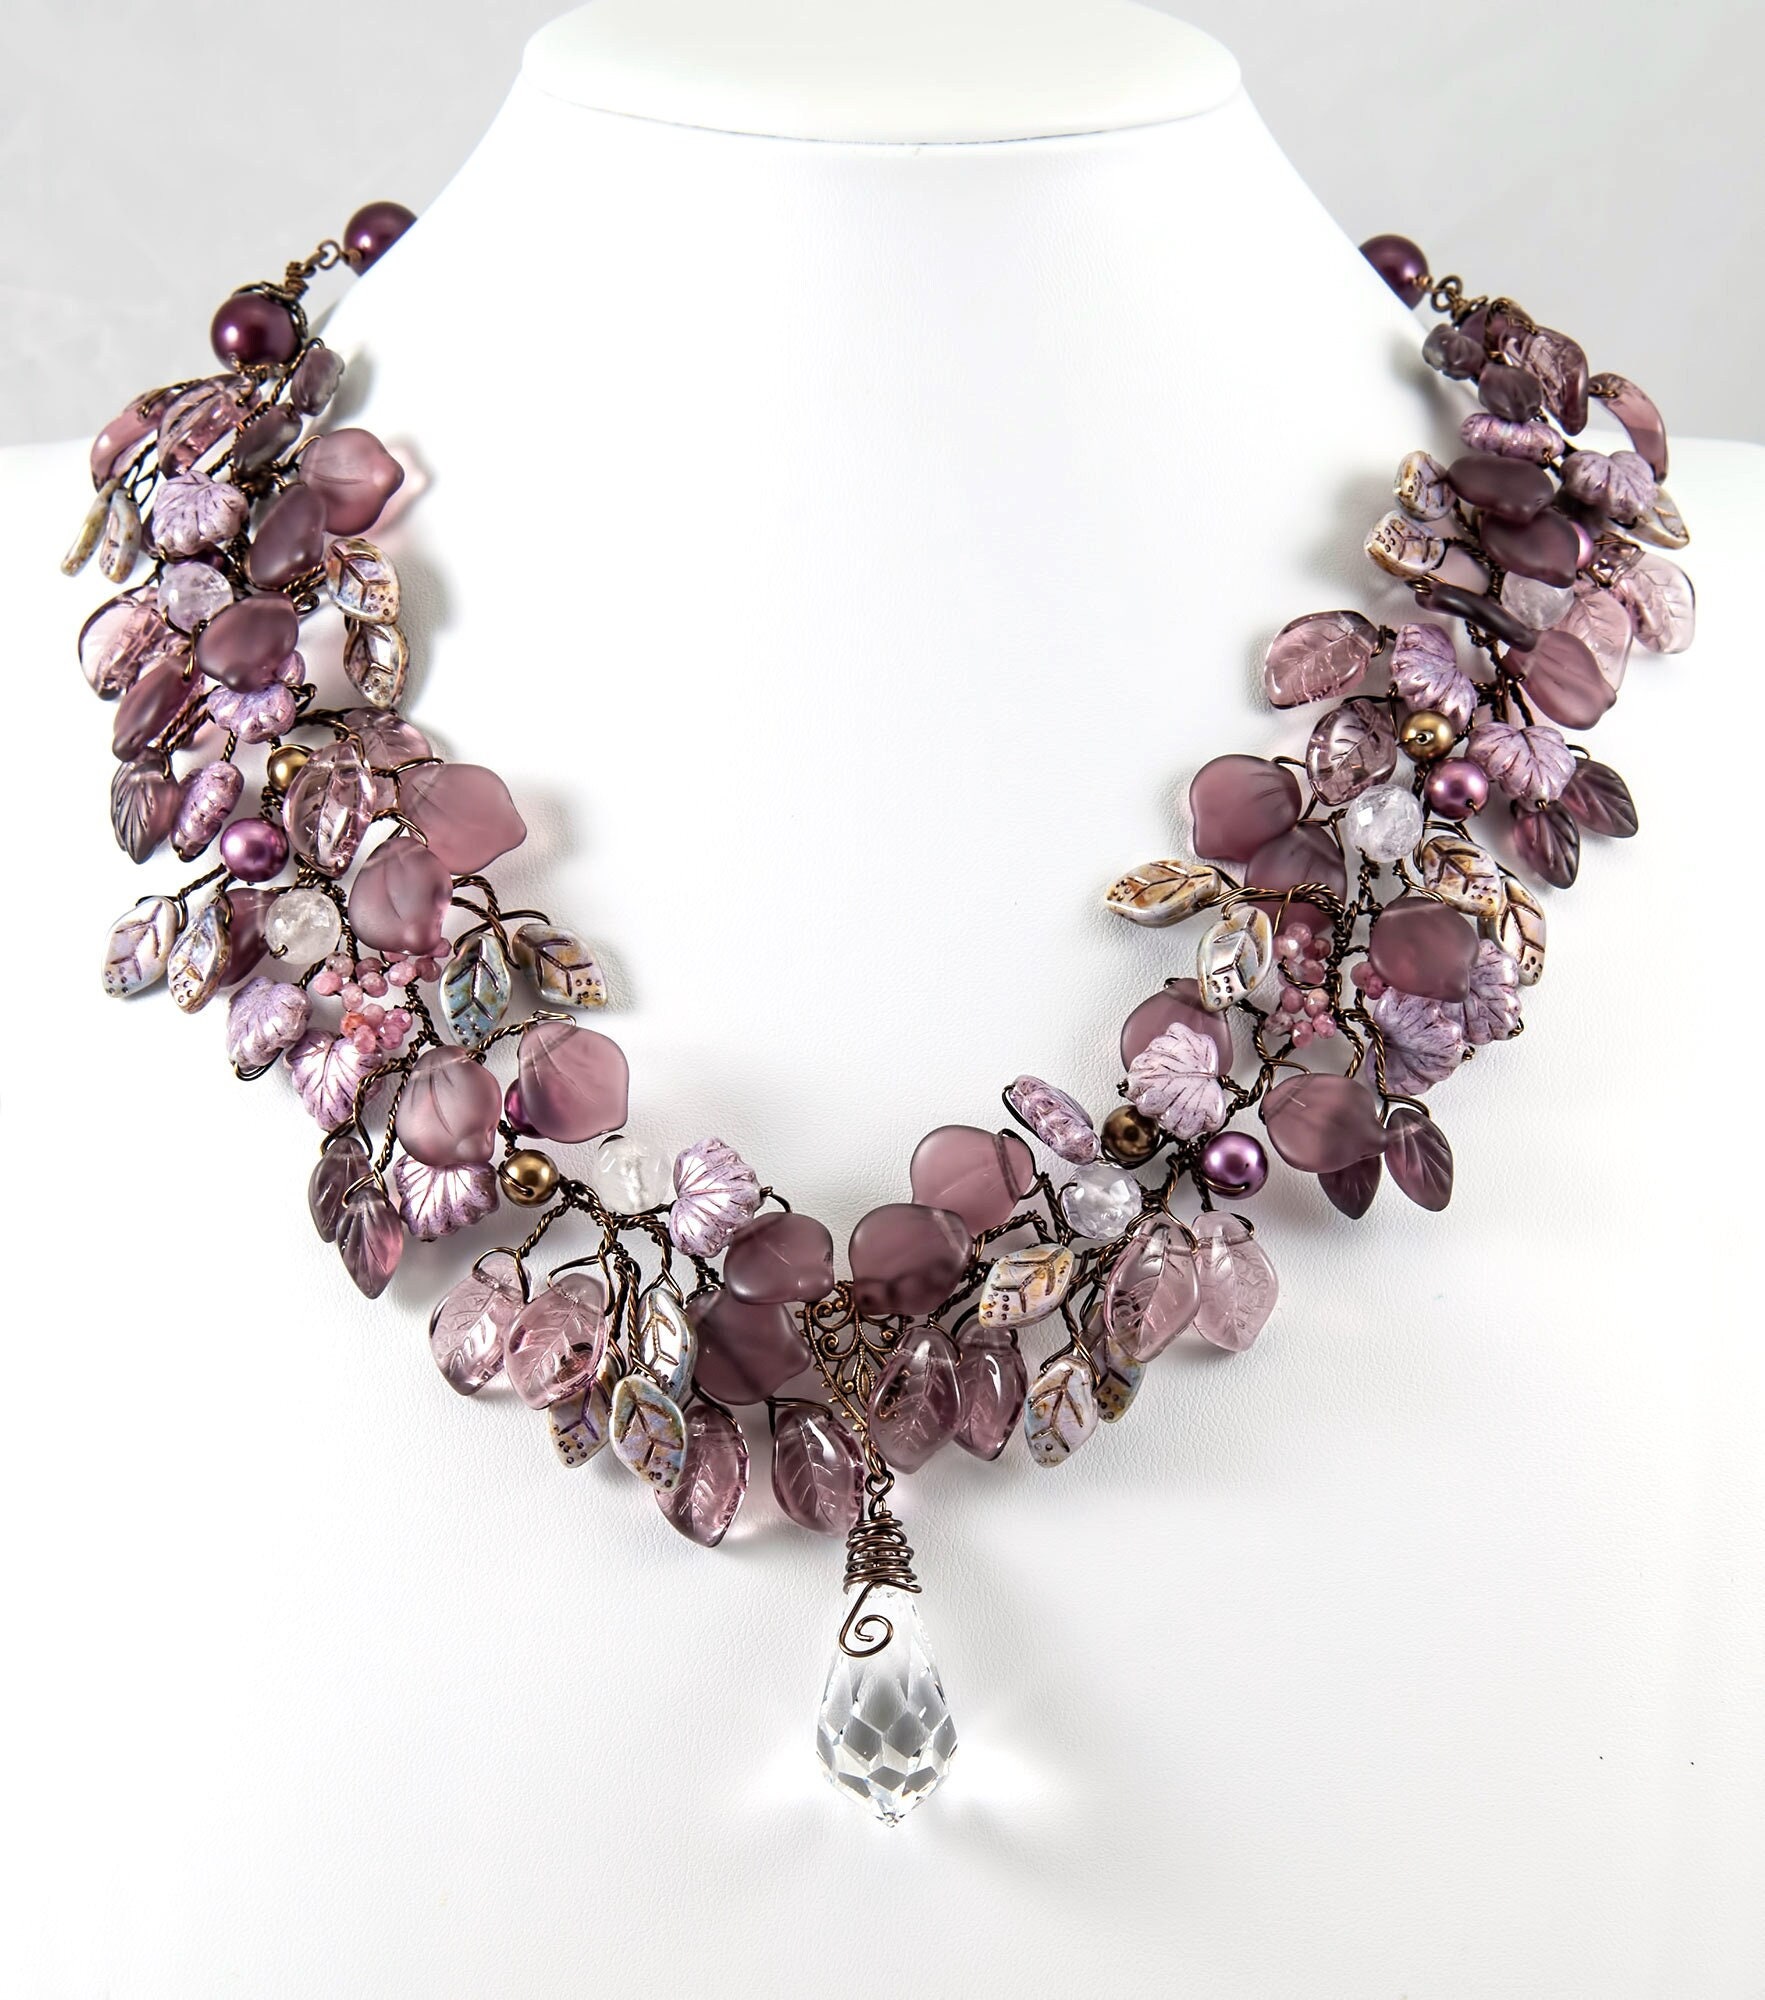 Plunder Multicolored Floral Jewel Statement Necklace - BPI India Pvt. Ltd.